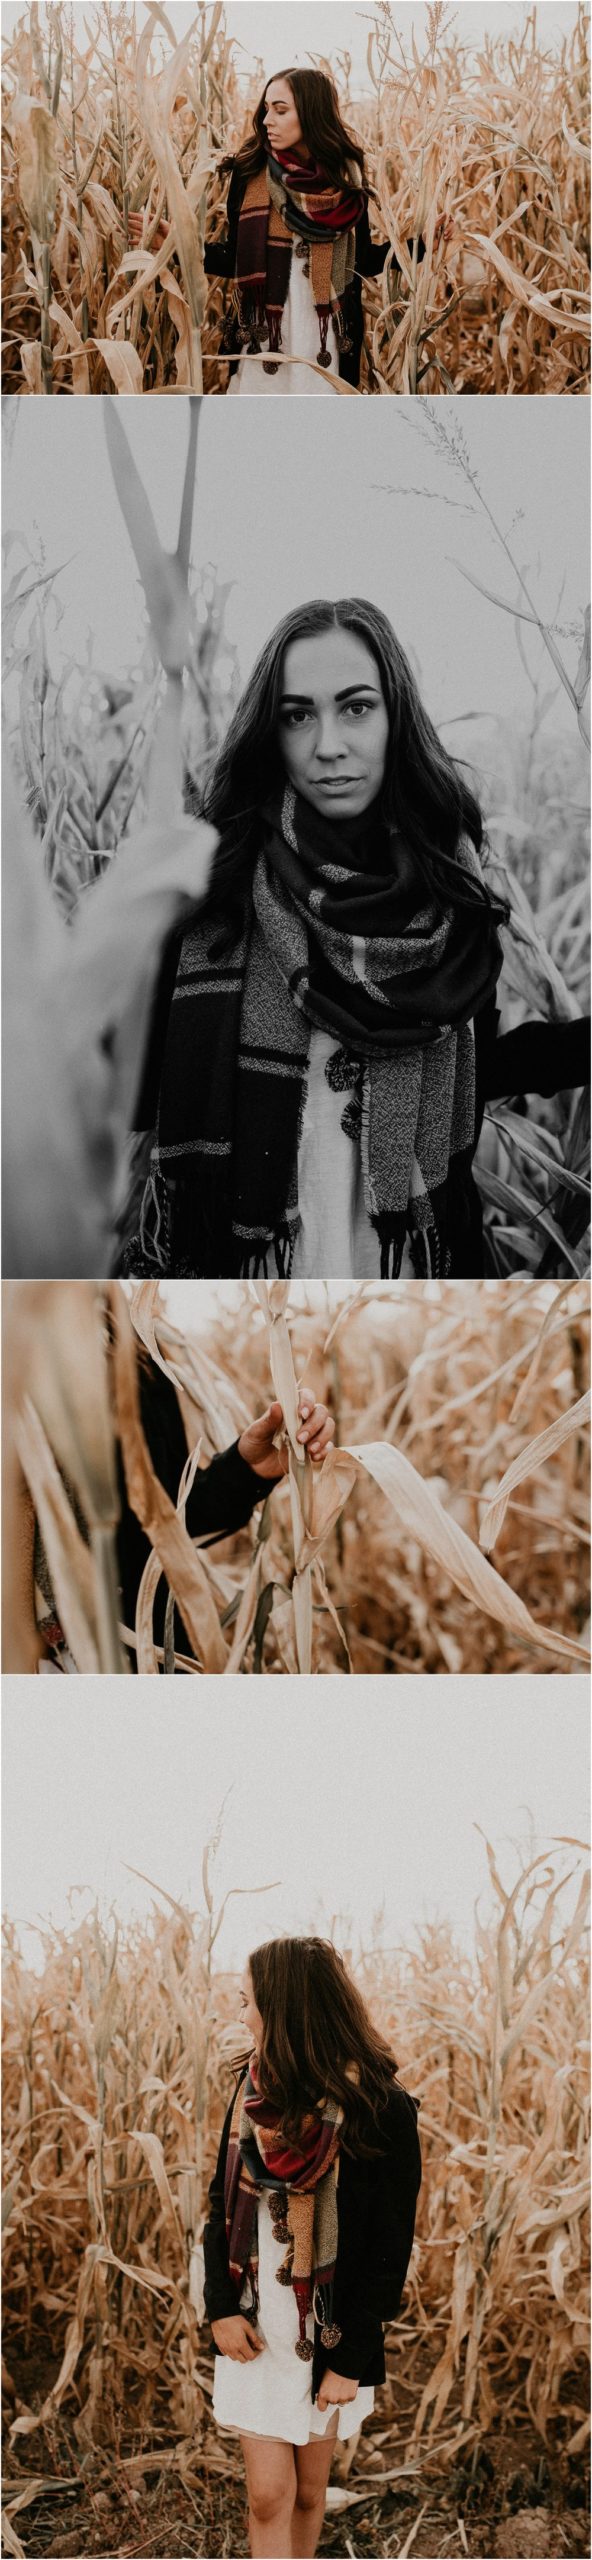 Boise Senior Boudoir Wedding Photographer Makayla Madden Photography Idaho Farmstead Corn Maze Fall Portrait Outfit Ideas Inspiration Plaid Scarf Pumpkin Patch